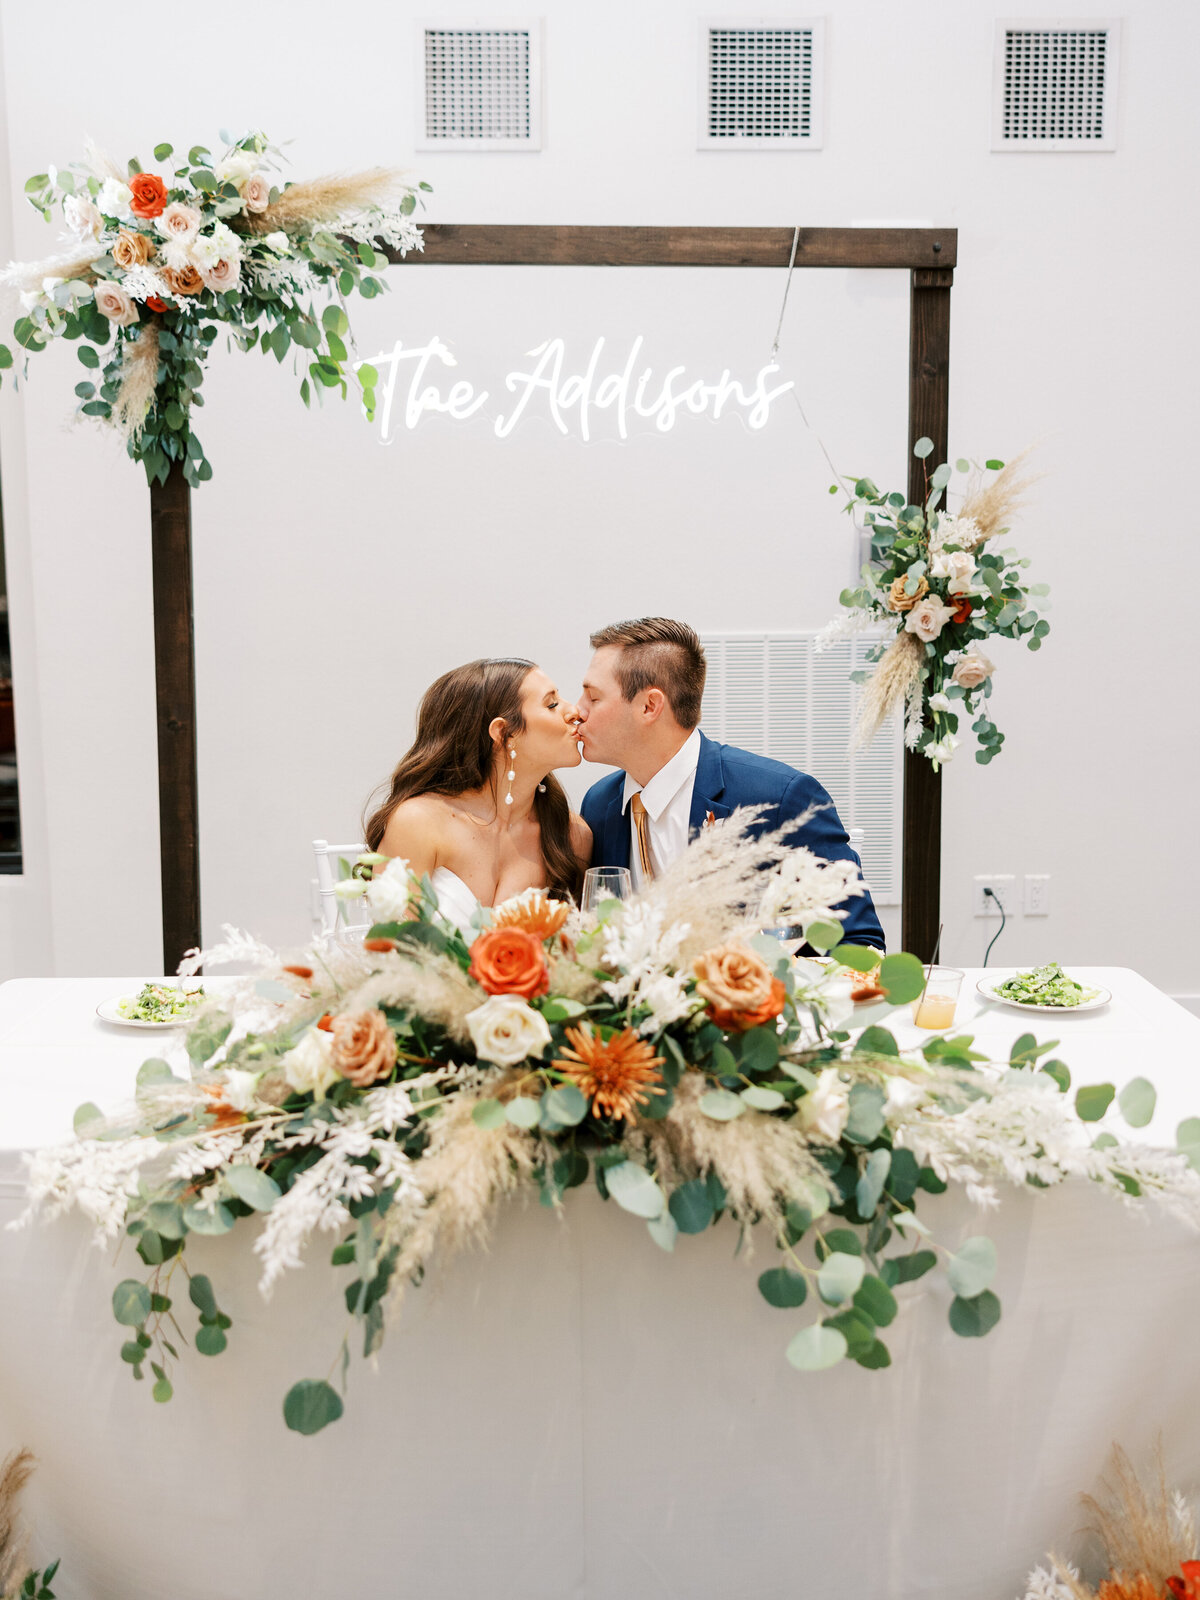 Addisons | Wedding Highlights-61